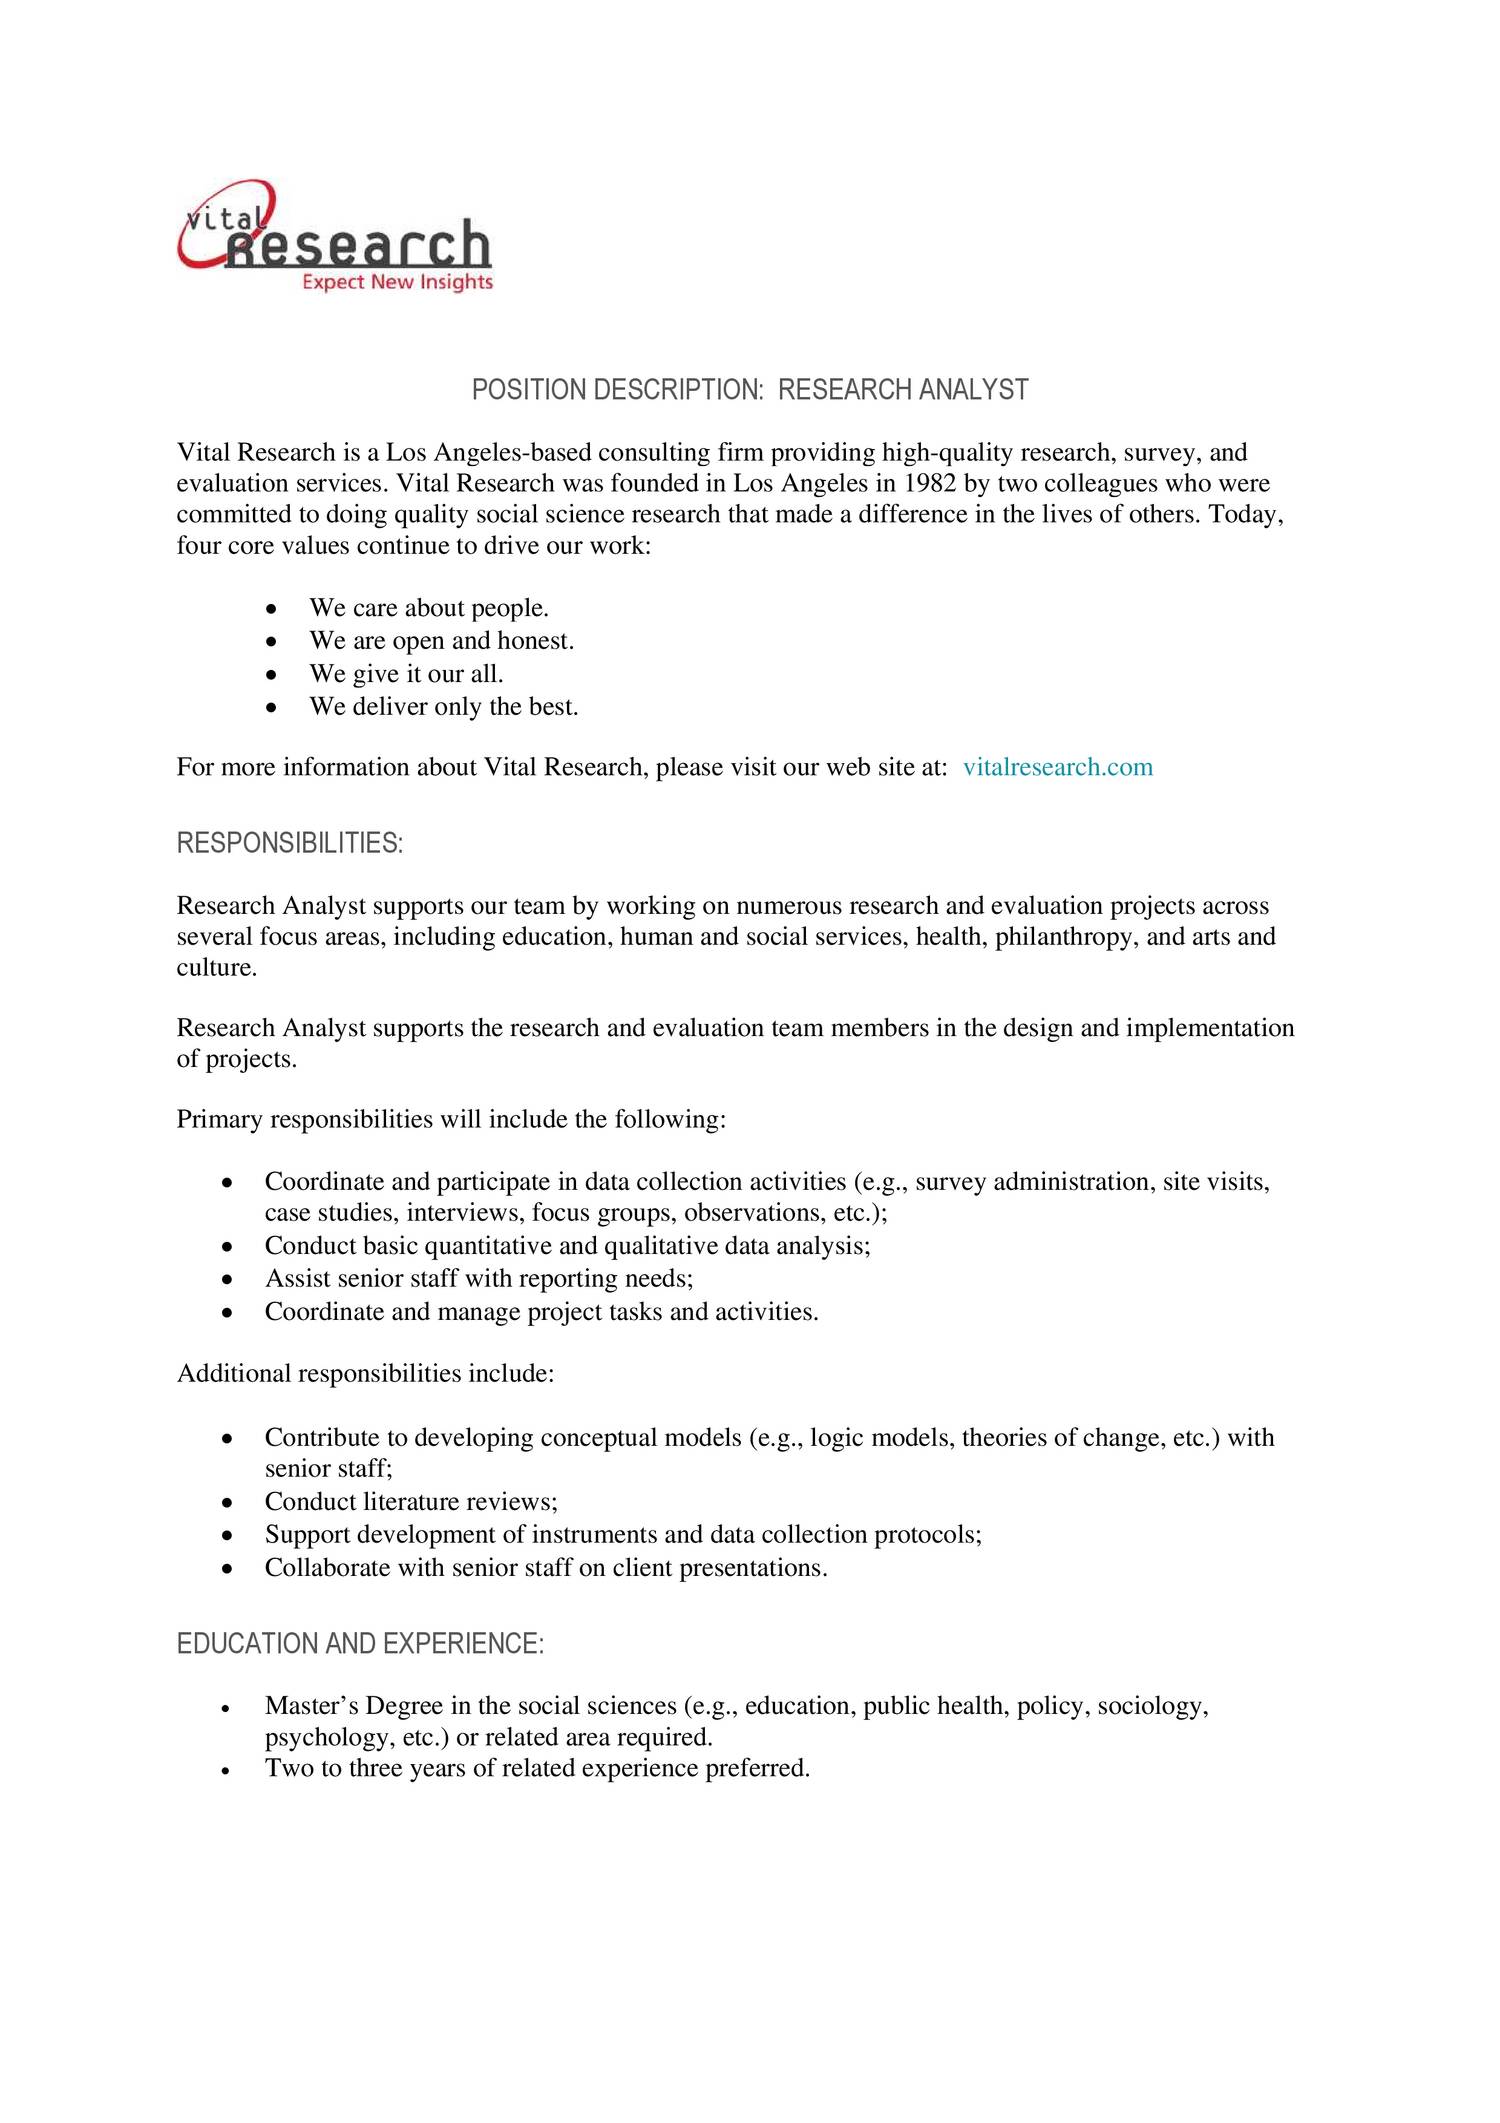 research analyst job description pdf